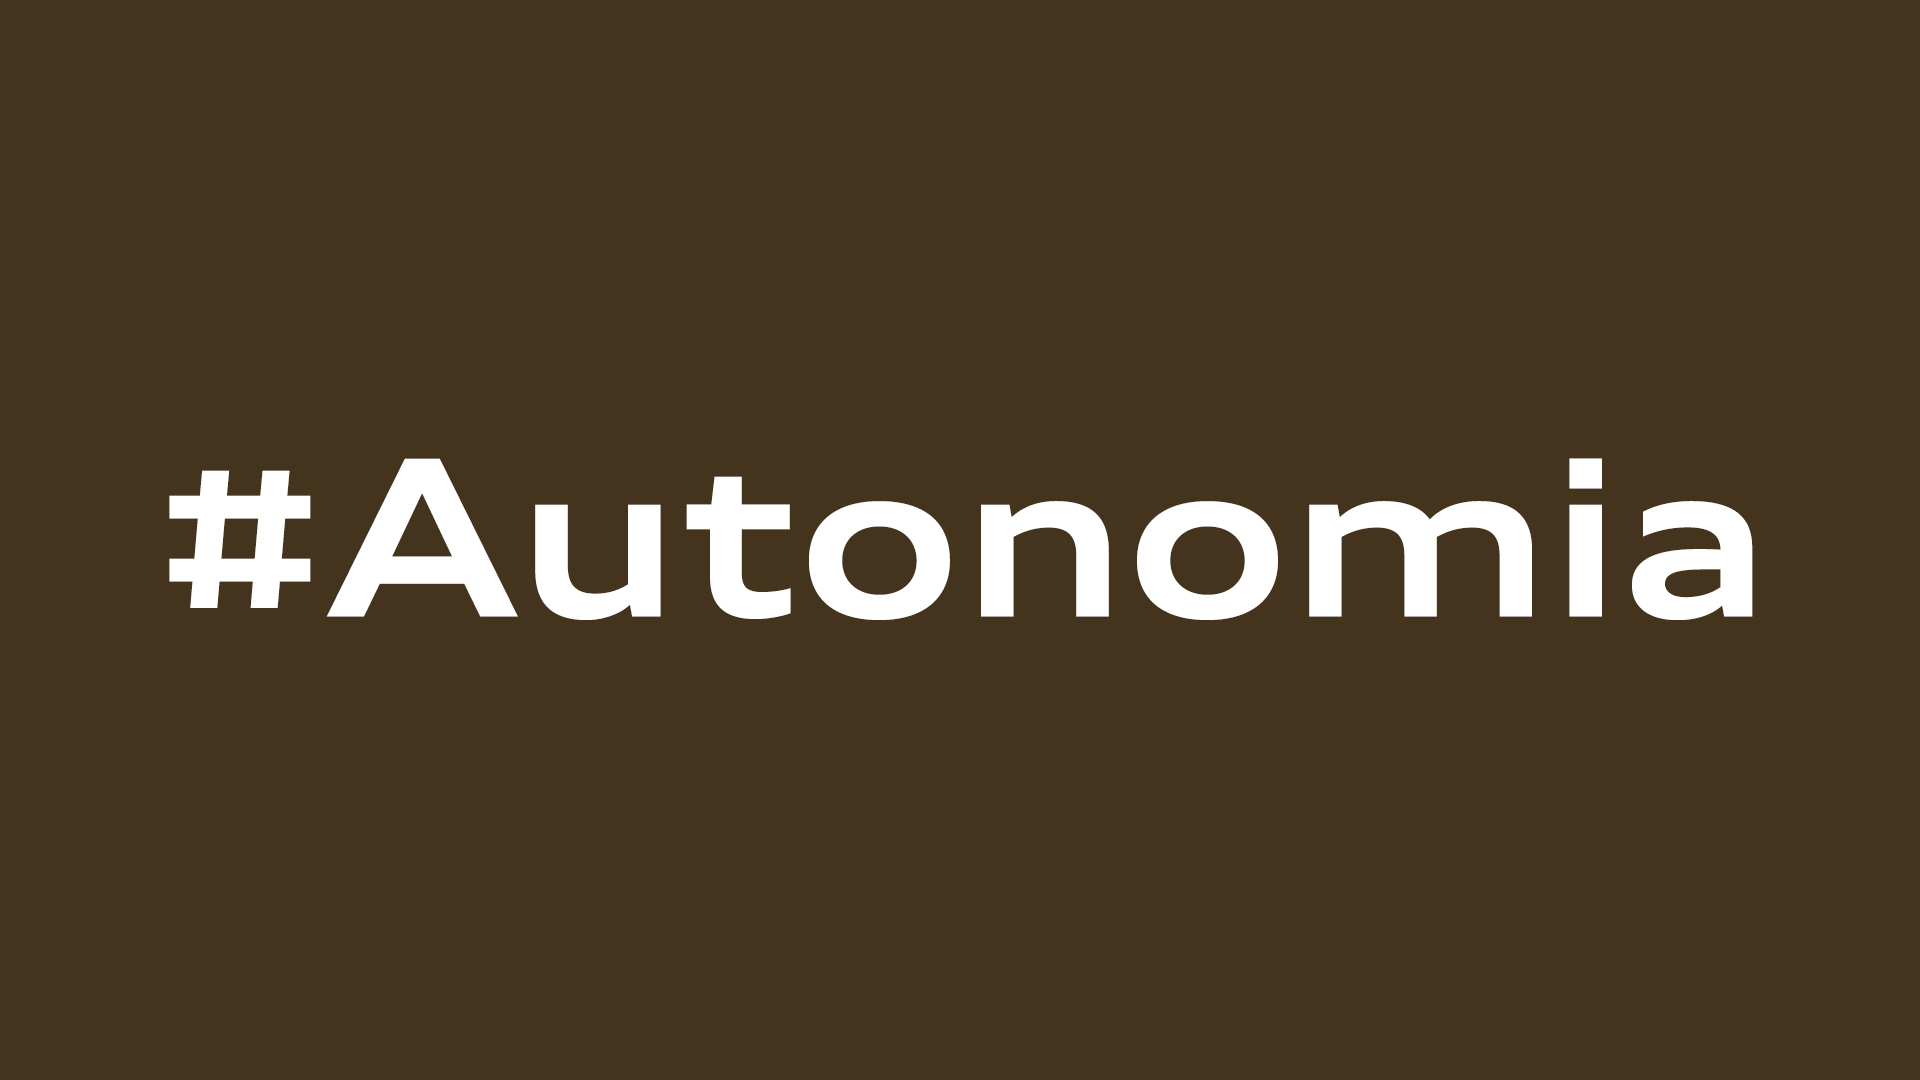 Autonomia